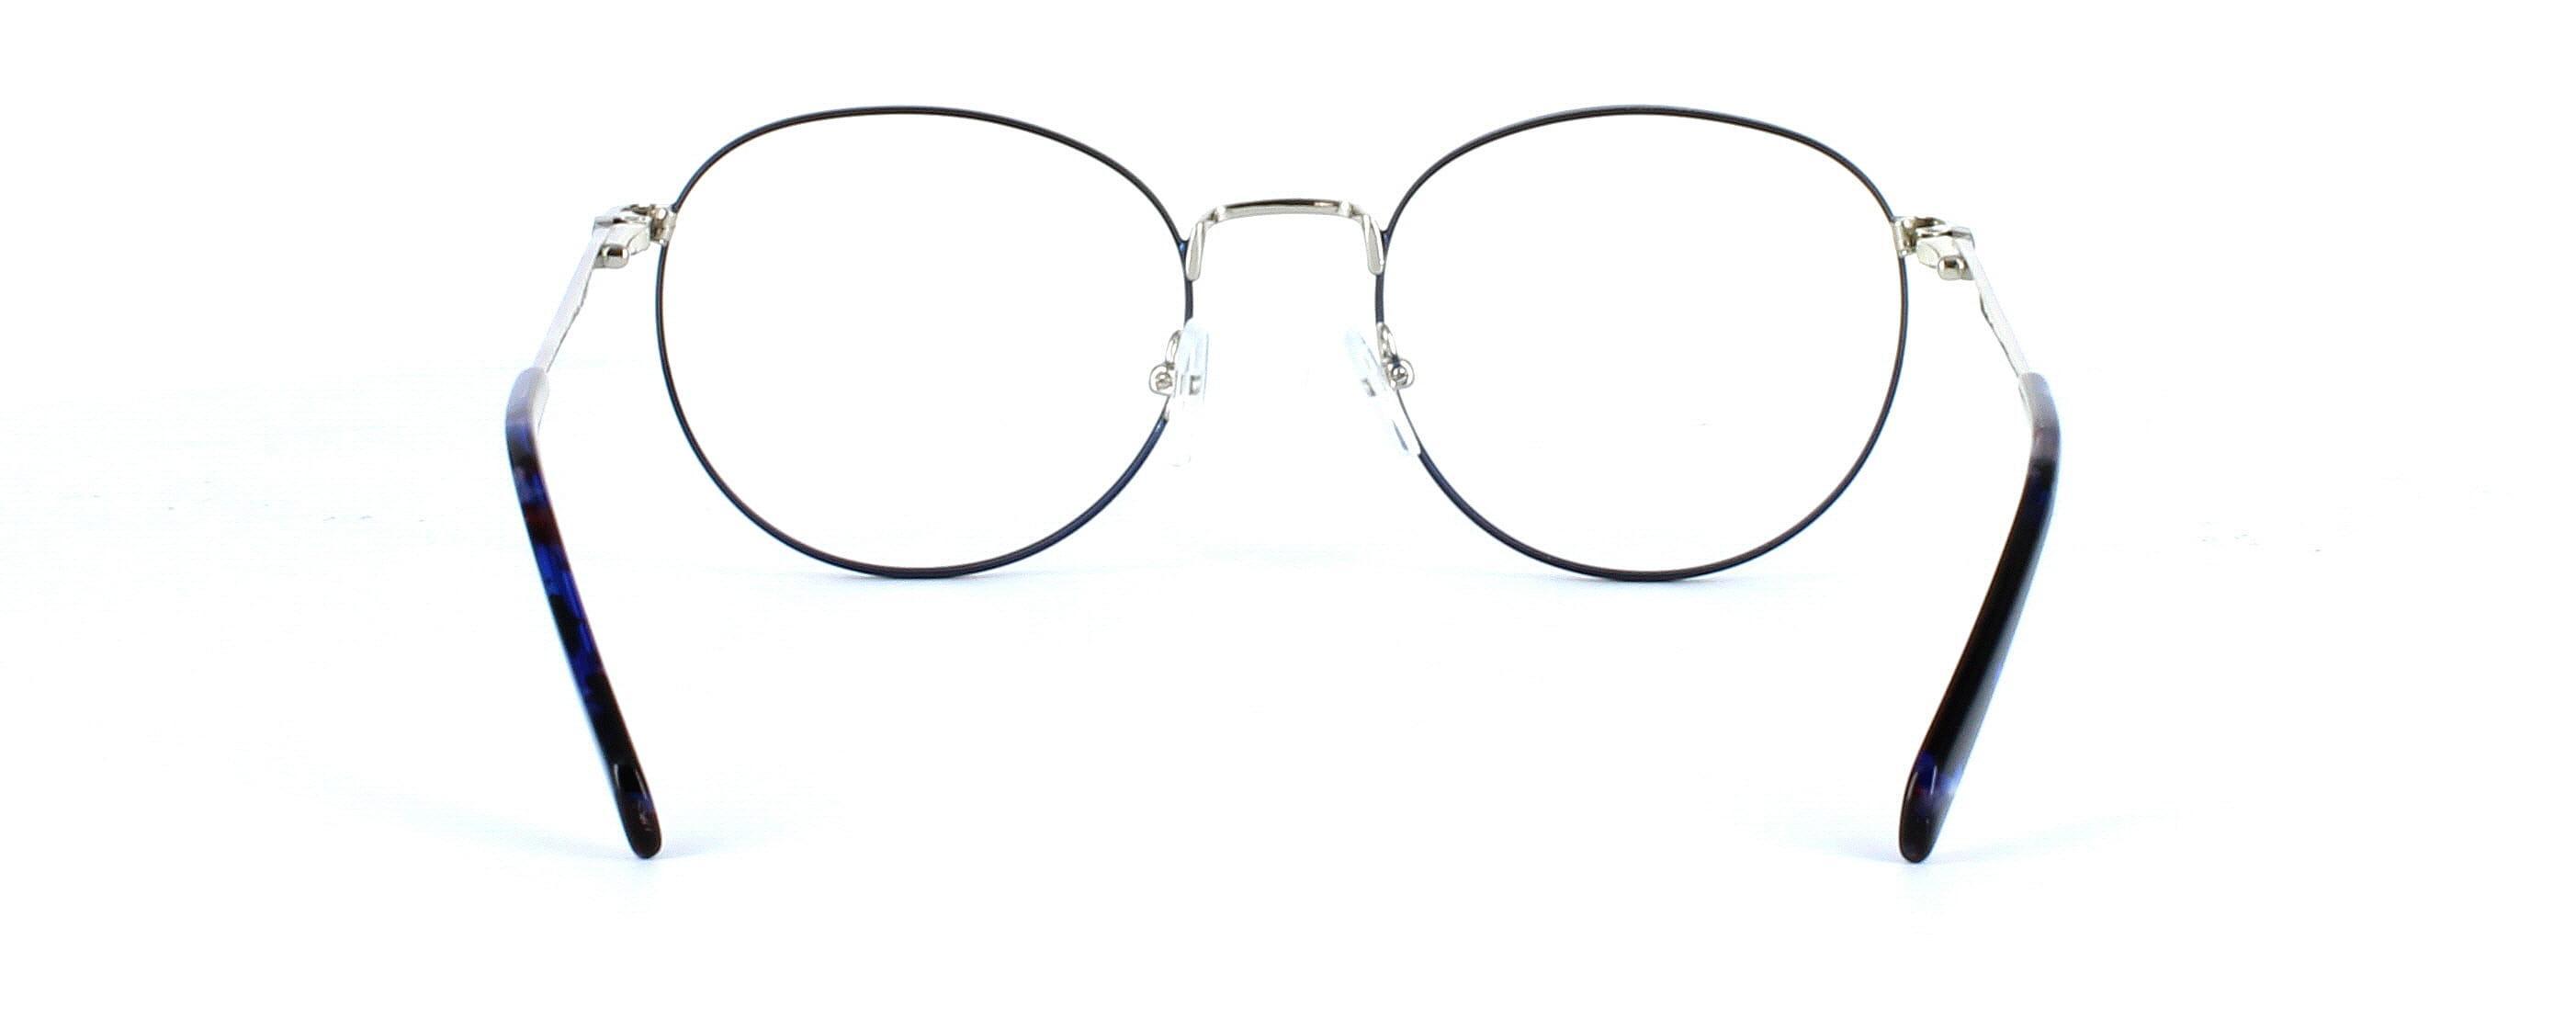 Borealis - Ladies 2-tone round metal glasses - blue & silver - image 3